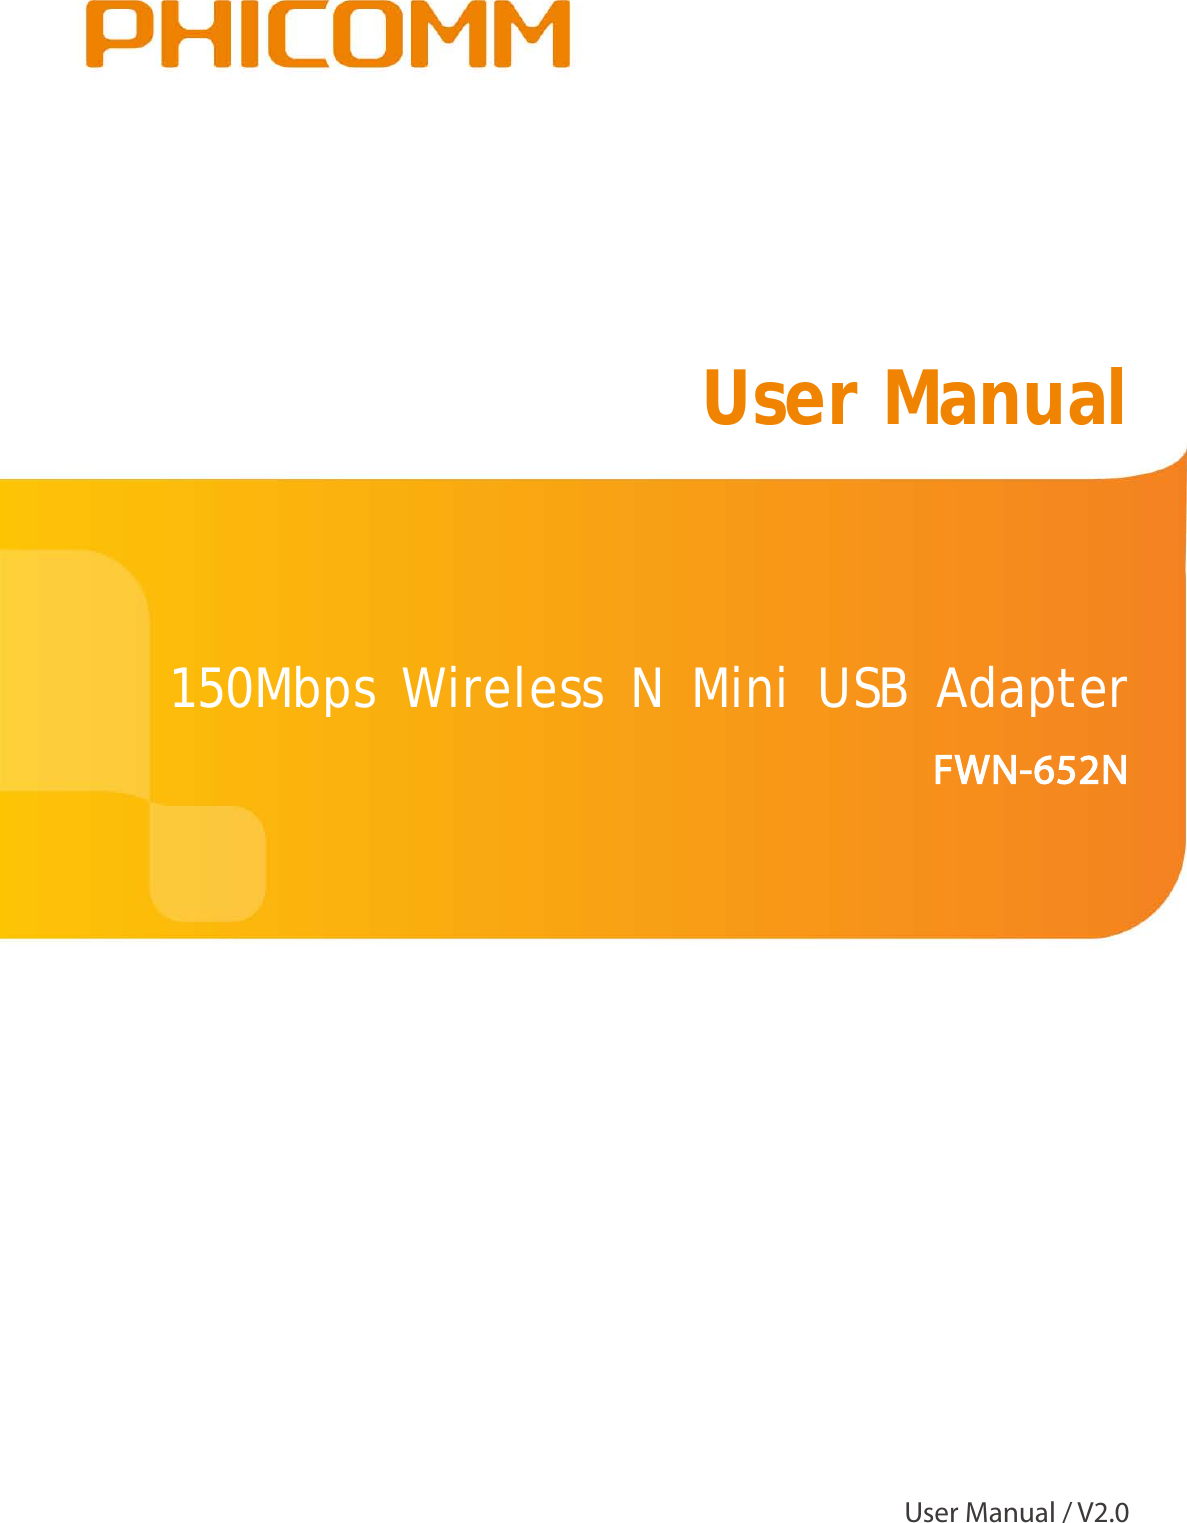                                                            150Mbps Wireless N Mini  USB Adapter  FWN-652N  User Manual  User Manual / V2.0 